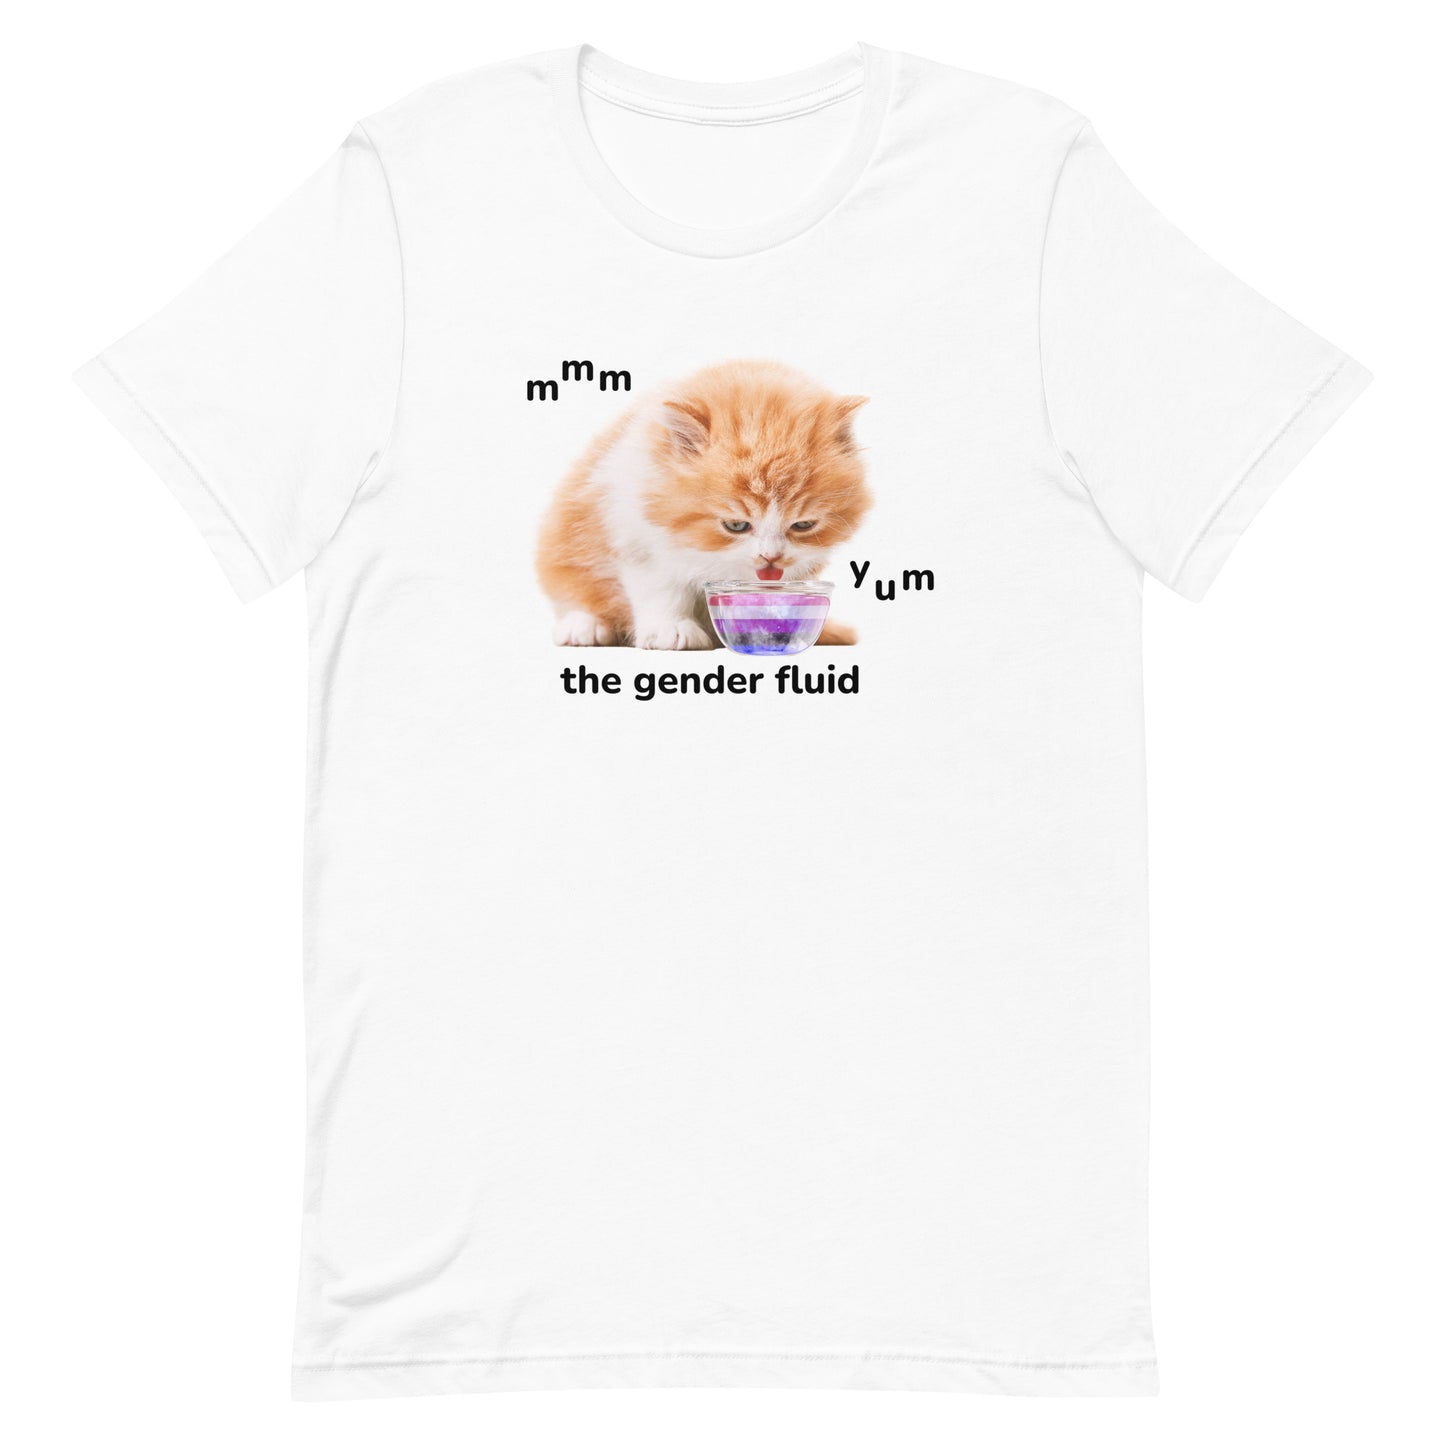 mmm yum the gender fluid Unisex t-shirt